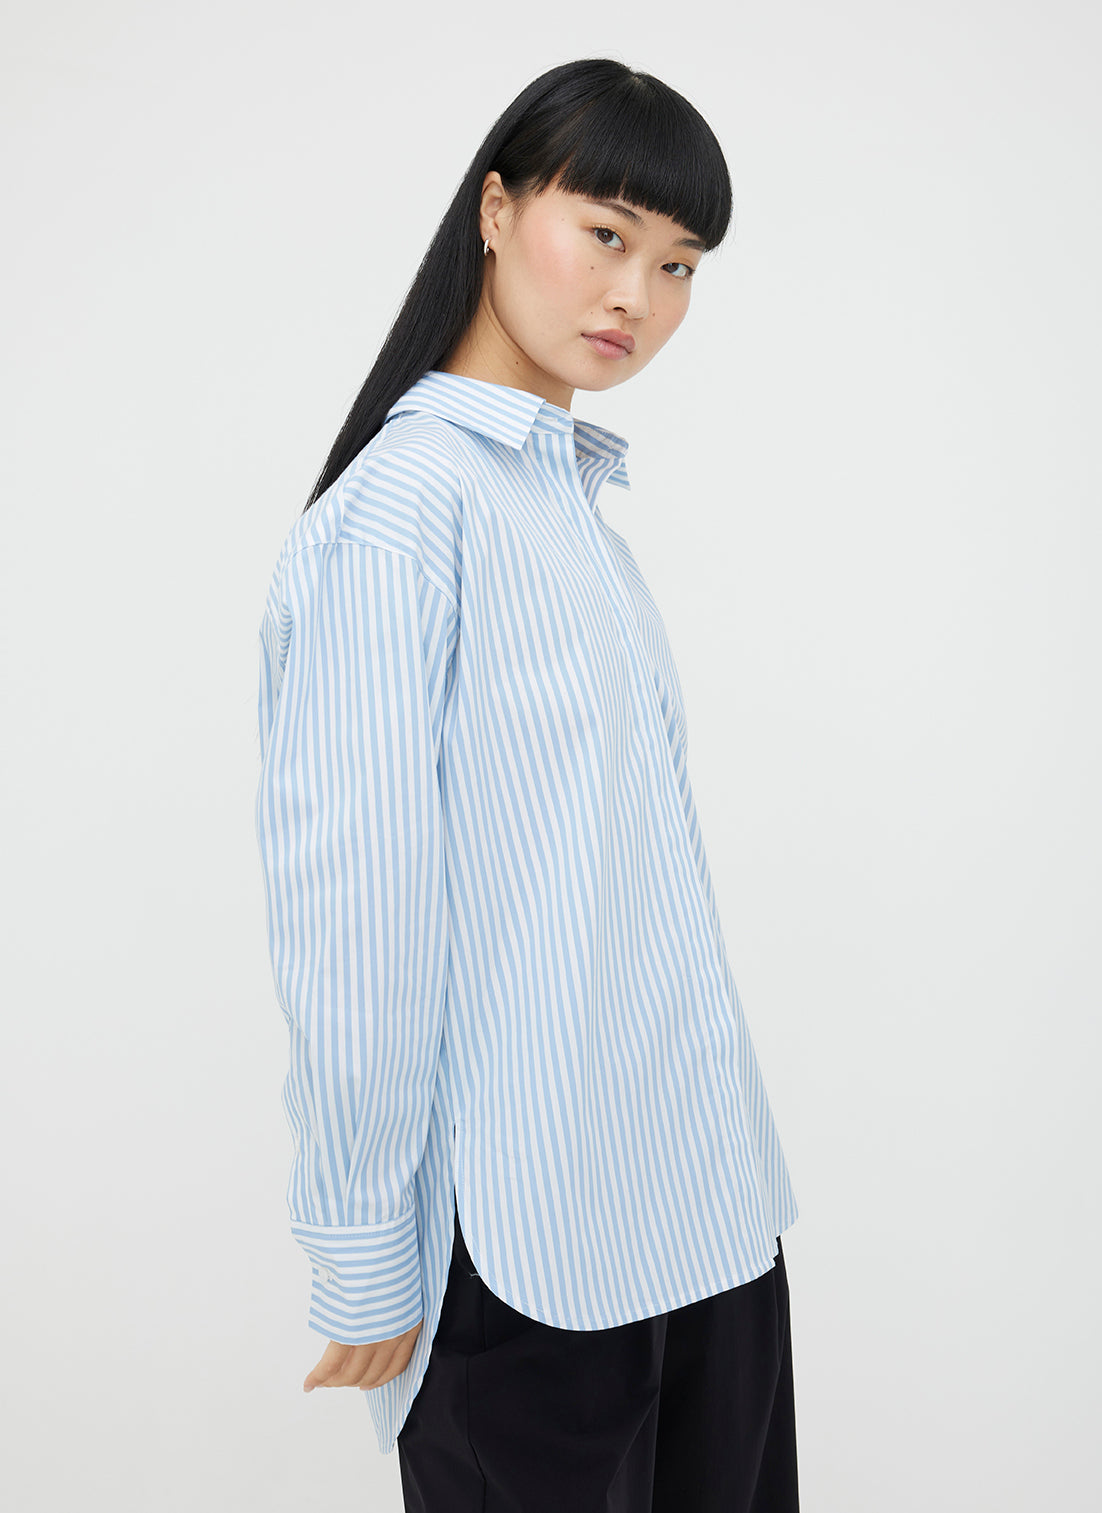 Kit and Ace Women's Marbella Boyfriend Shirt Bright White/Cool Blue Stripe - Size XS